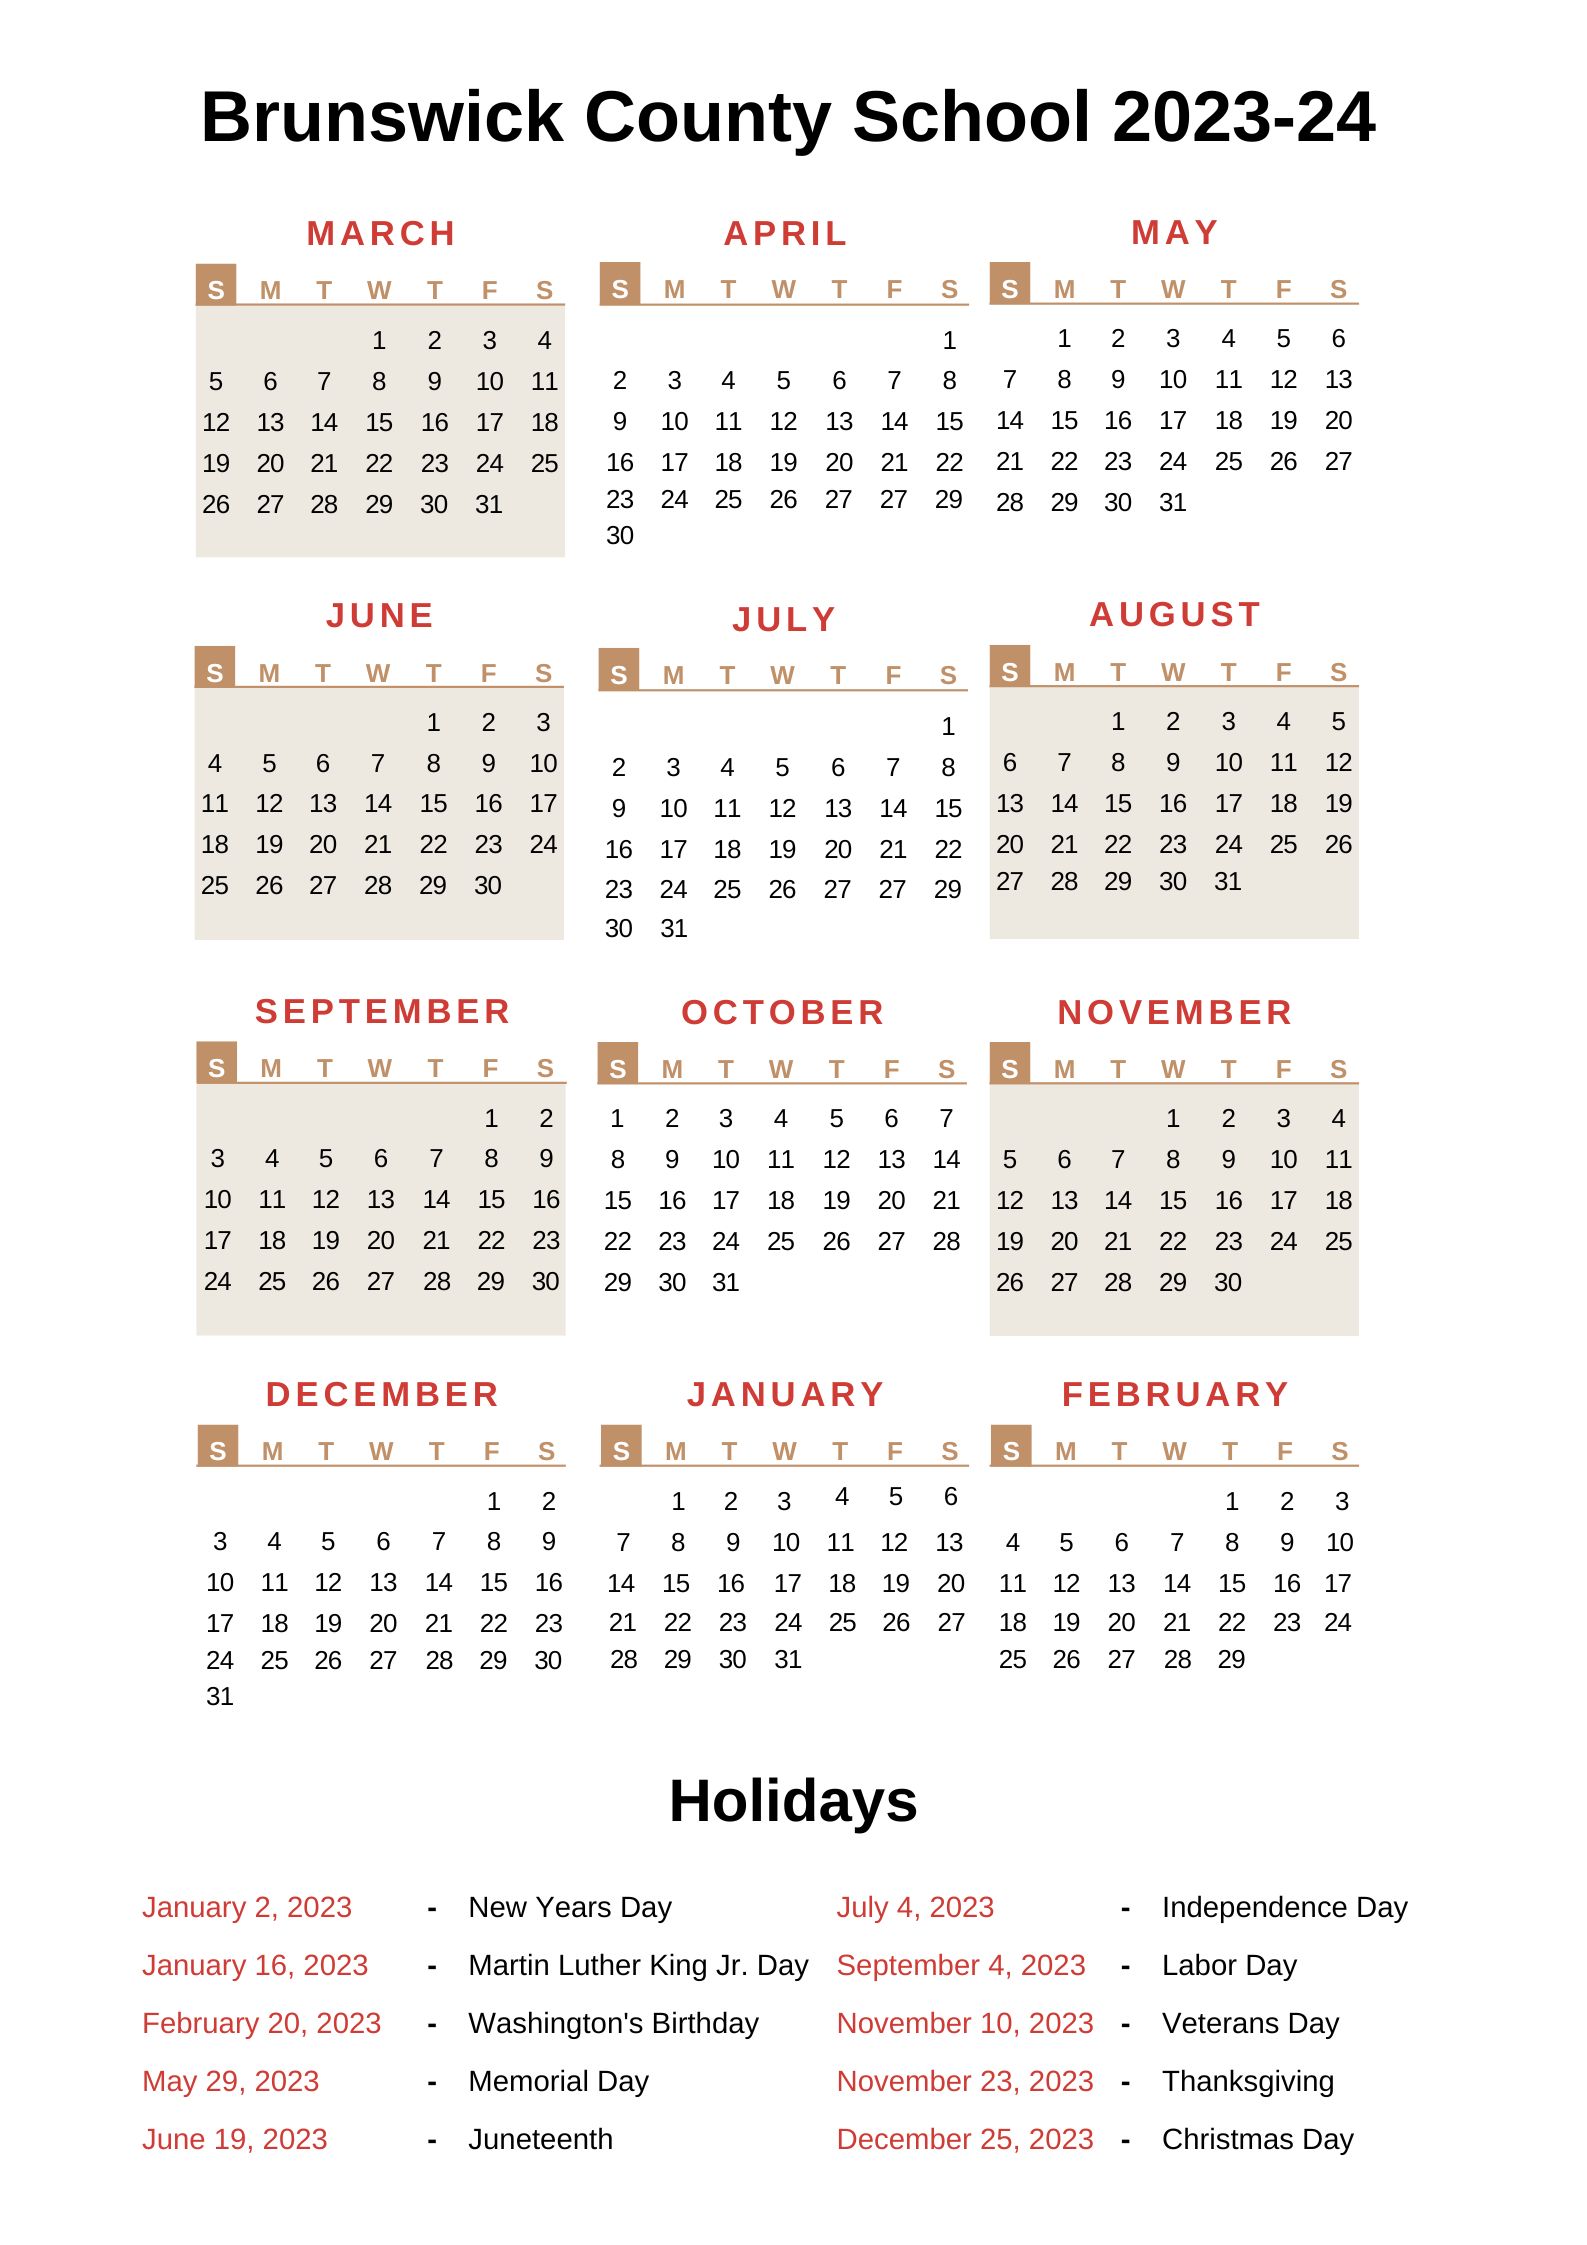 Brunswick County Schools Calendar 2023 24 With Holidays